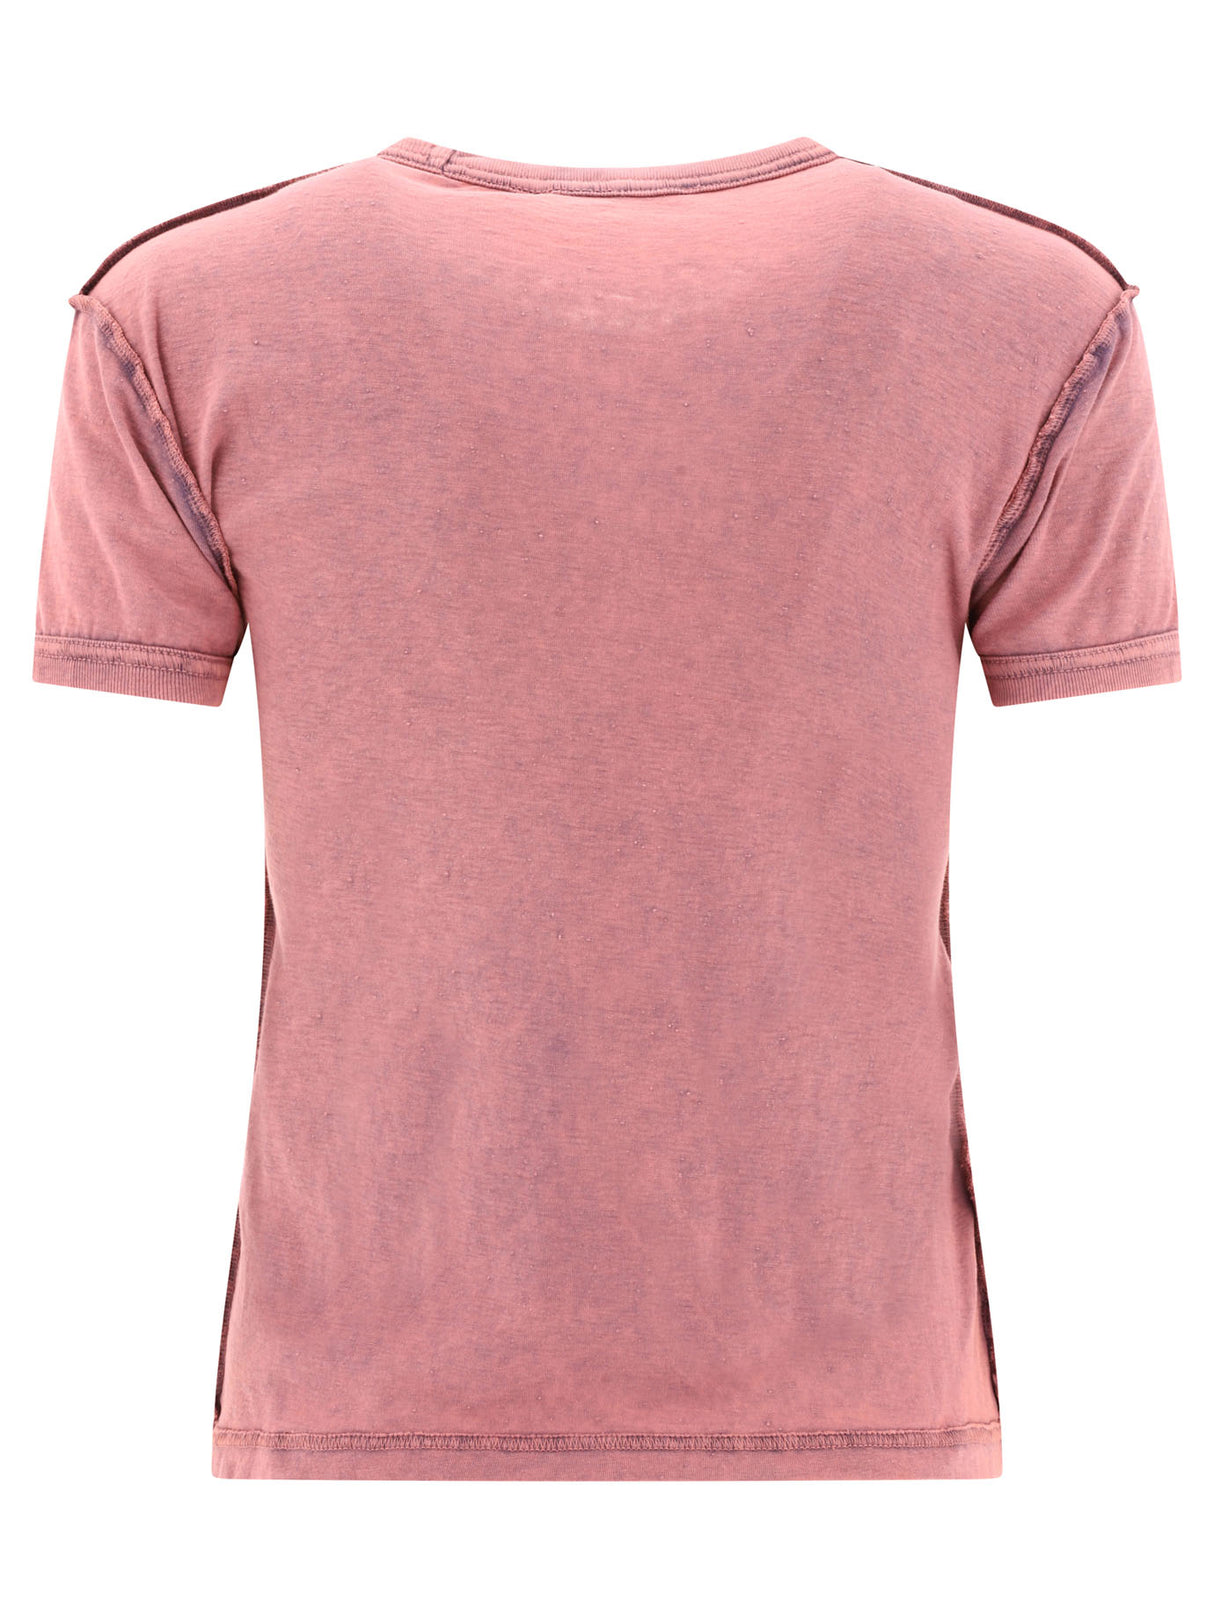 ACNE STUDIOS Pink Logo T-Shirt for Women